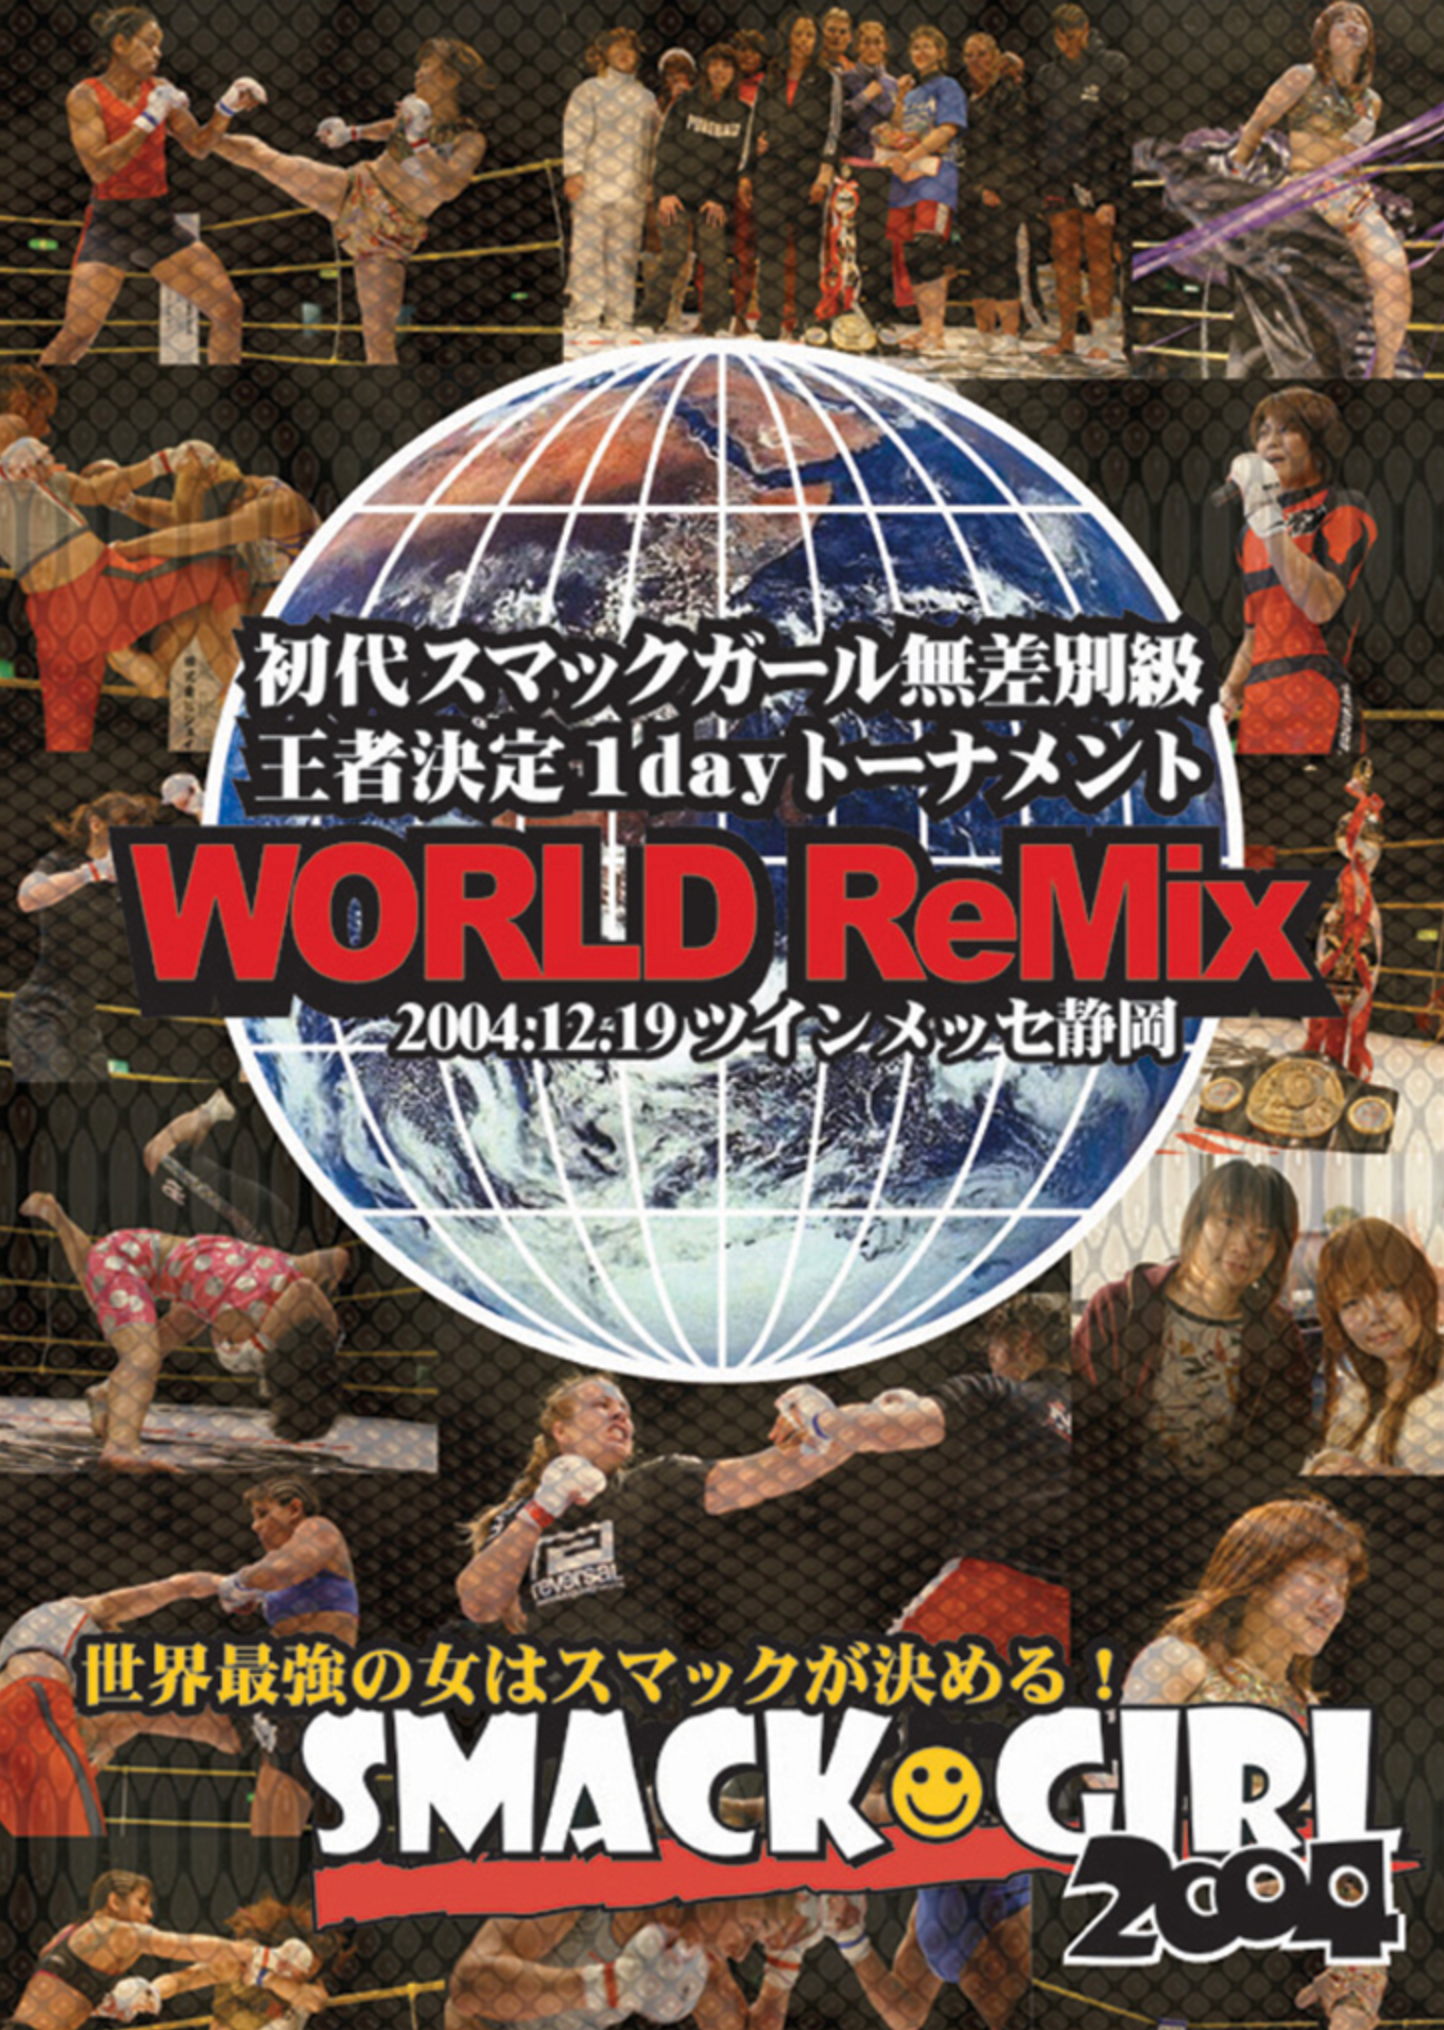 Smack Girl World Remix 12/29/2004 DVD - Budovideos Inc